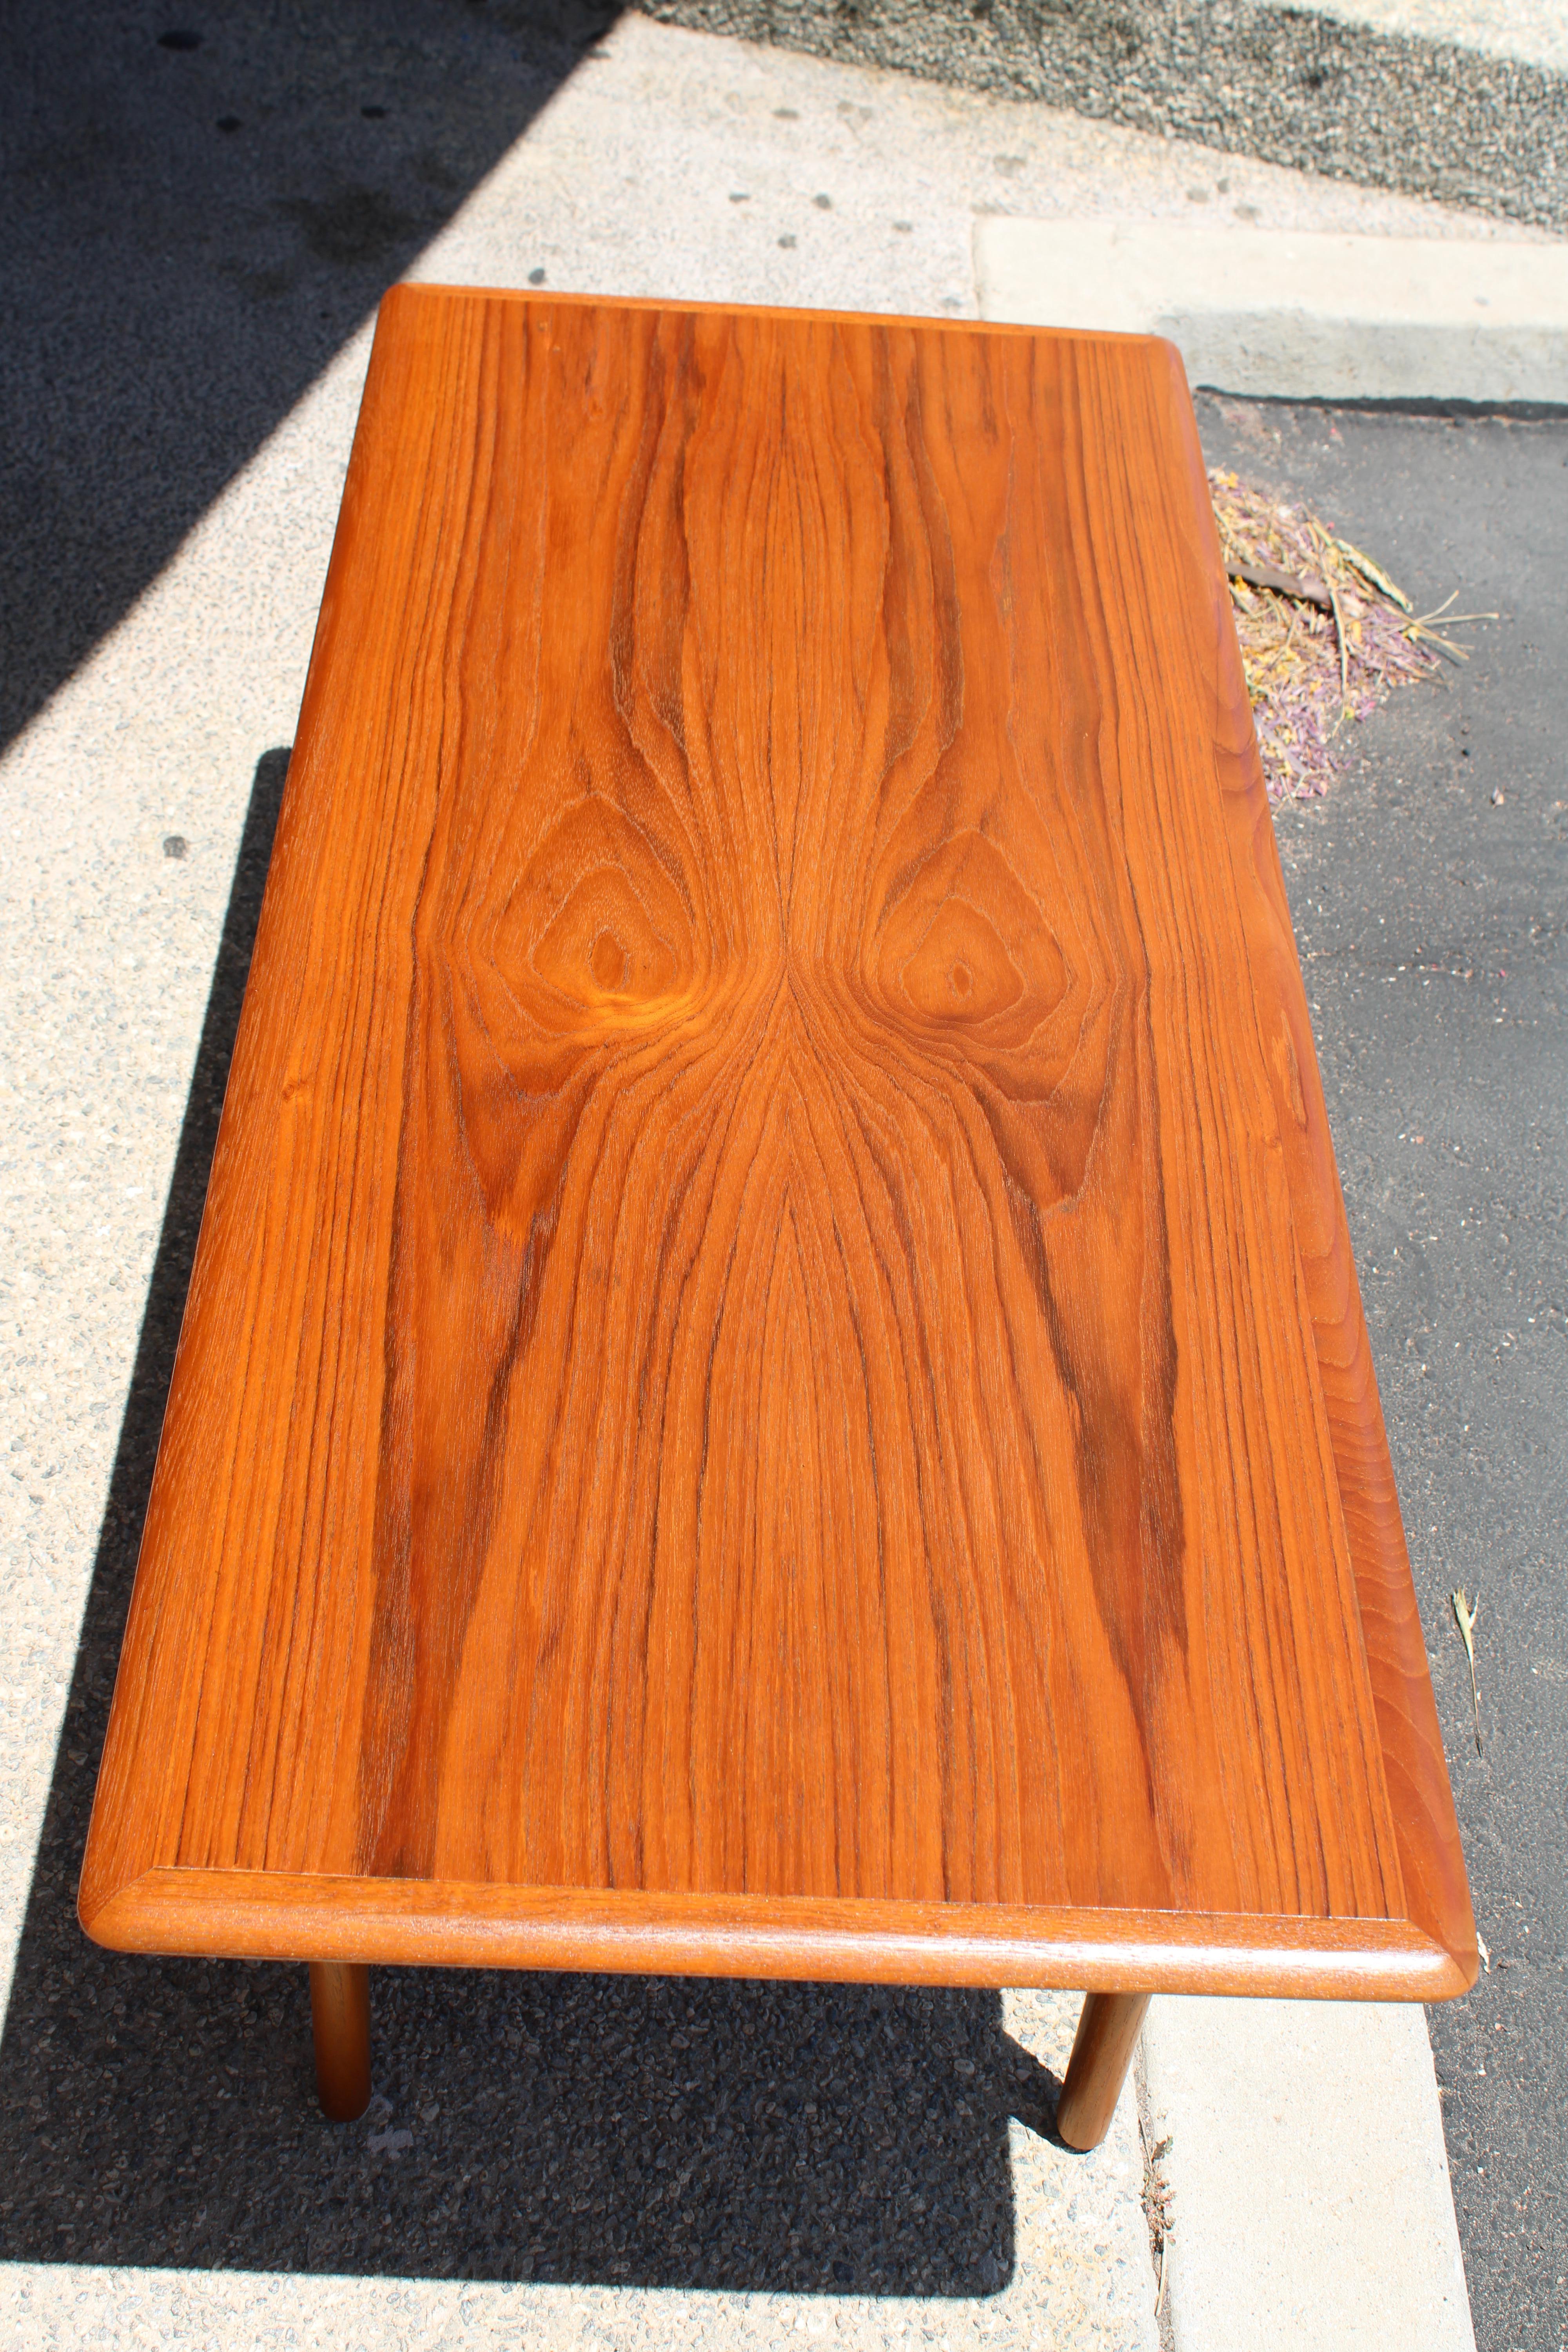 Teak Danish coffee table with an incredible wood grain pattern. Table measures 47